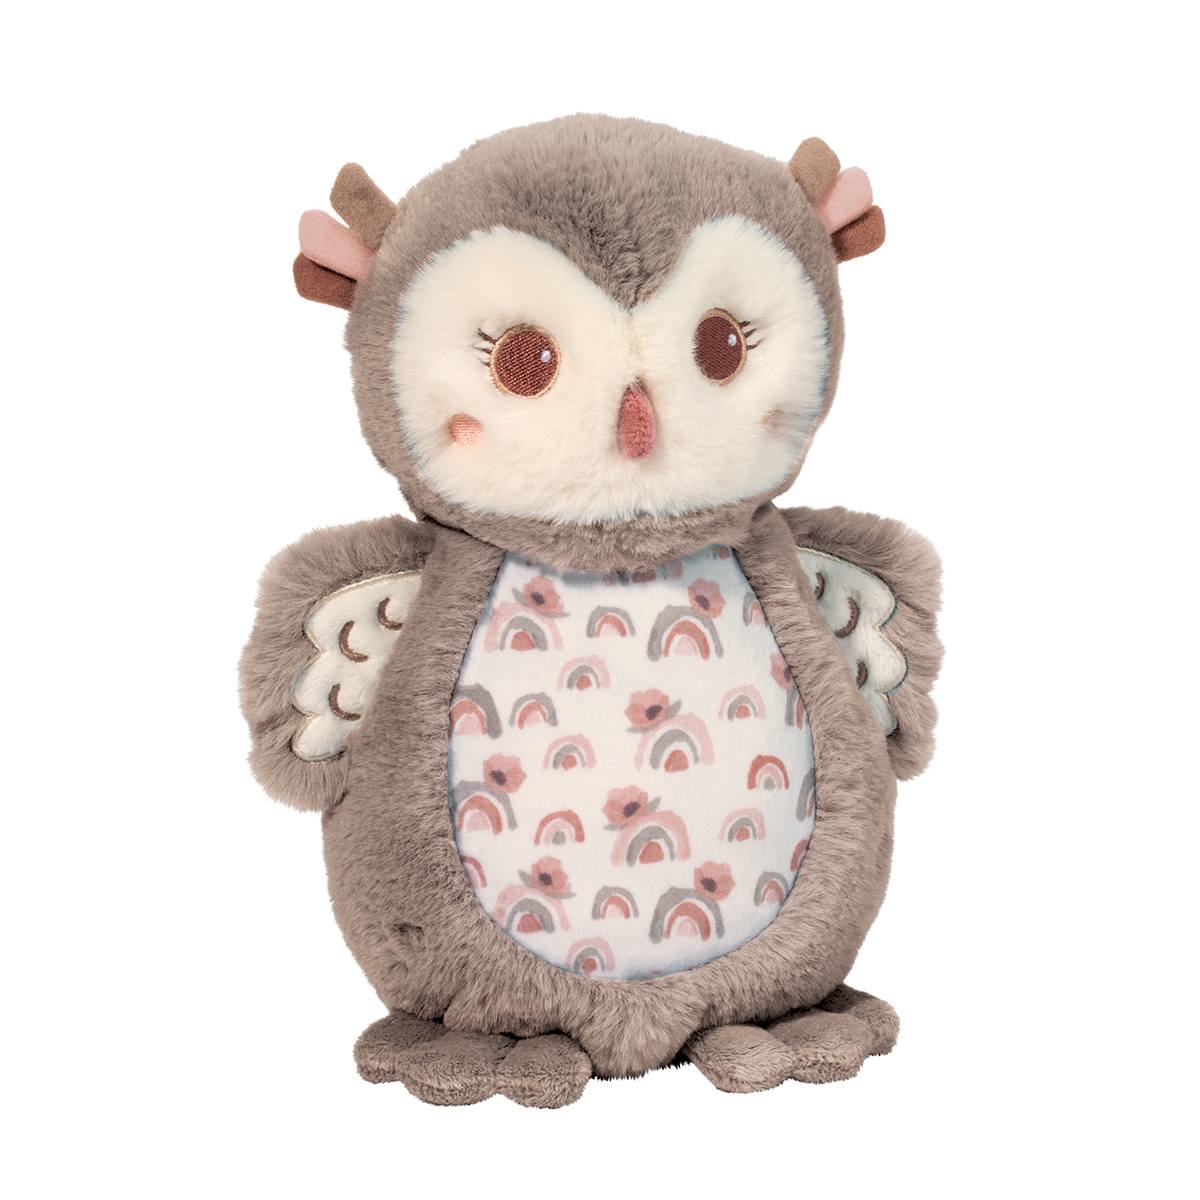 Nova Owl Plumpie Chime by Douglas #6570